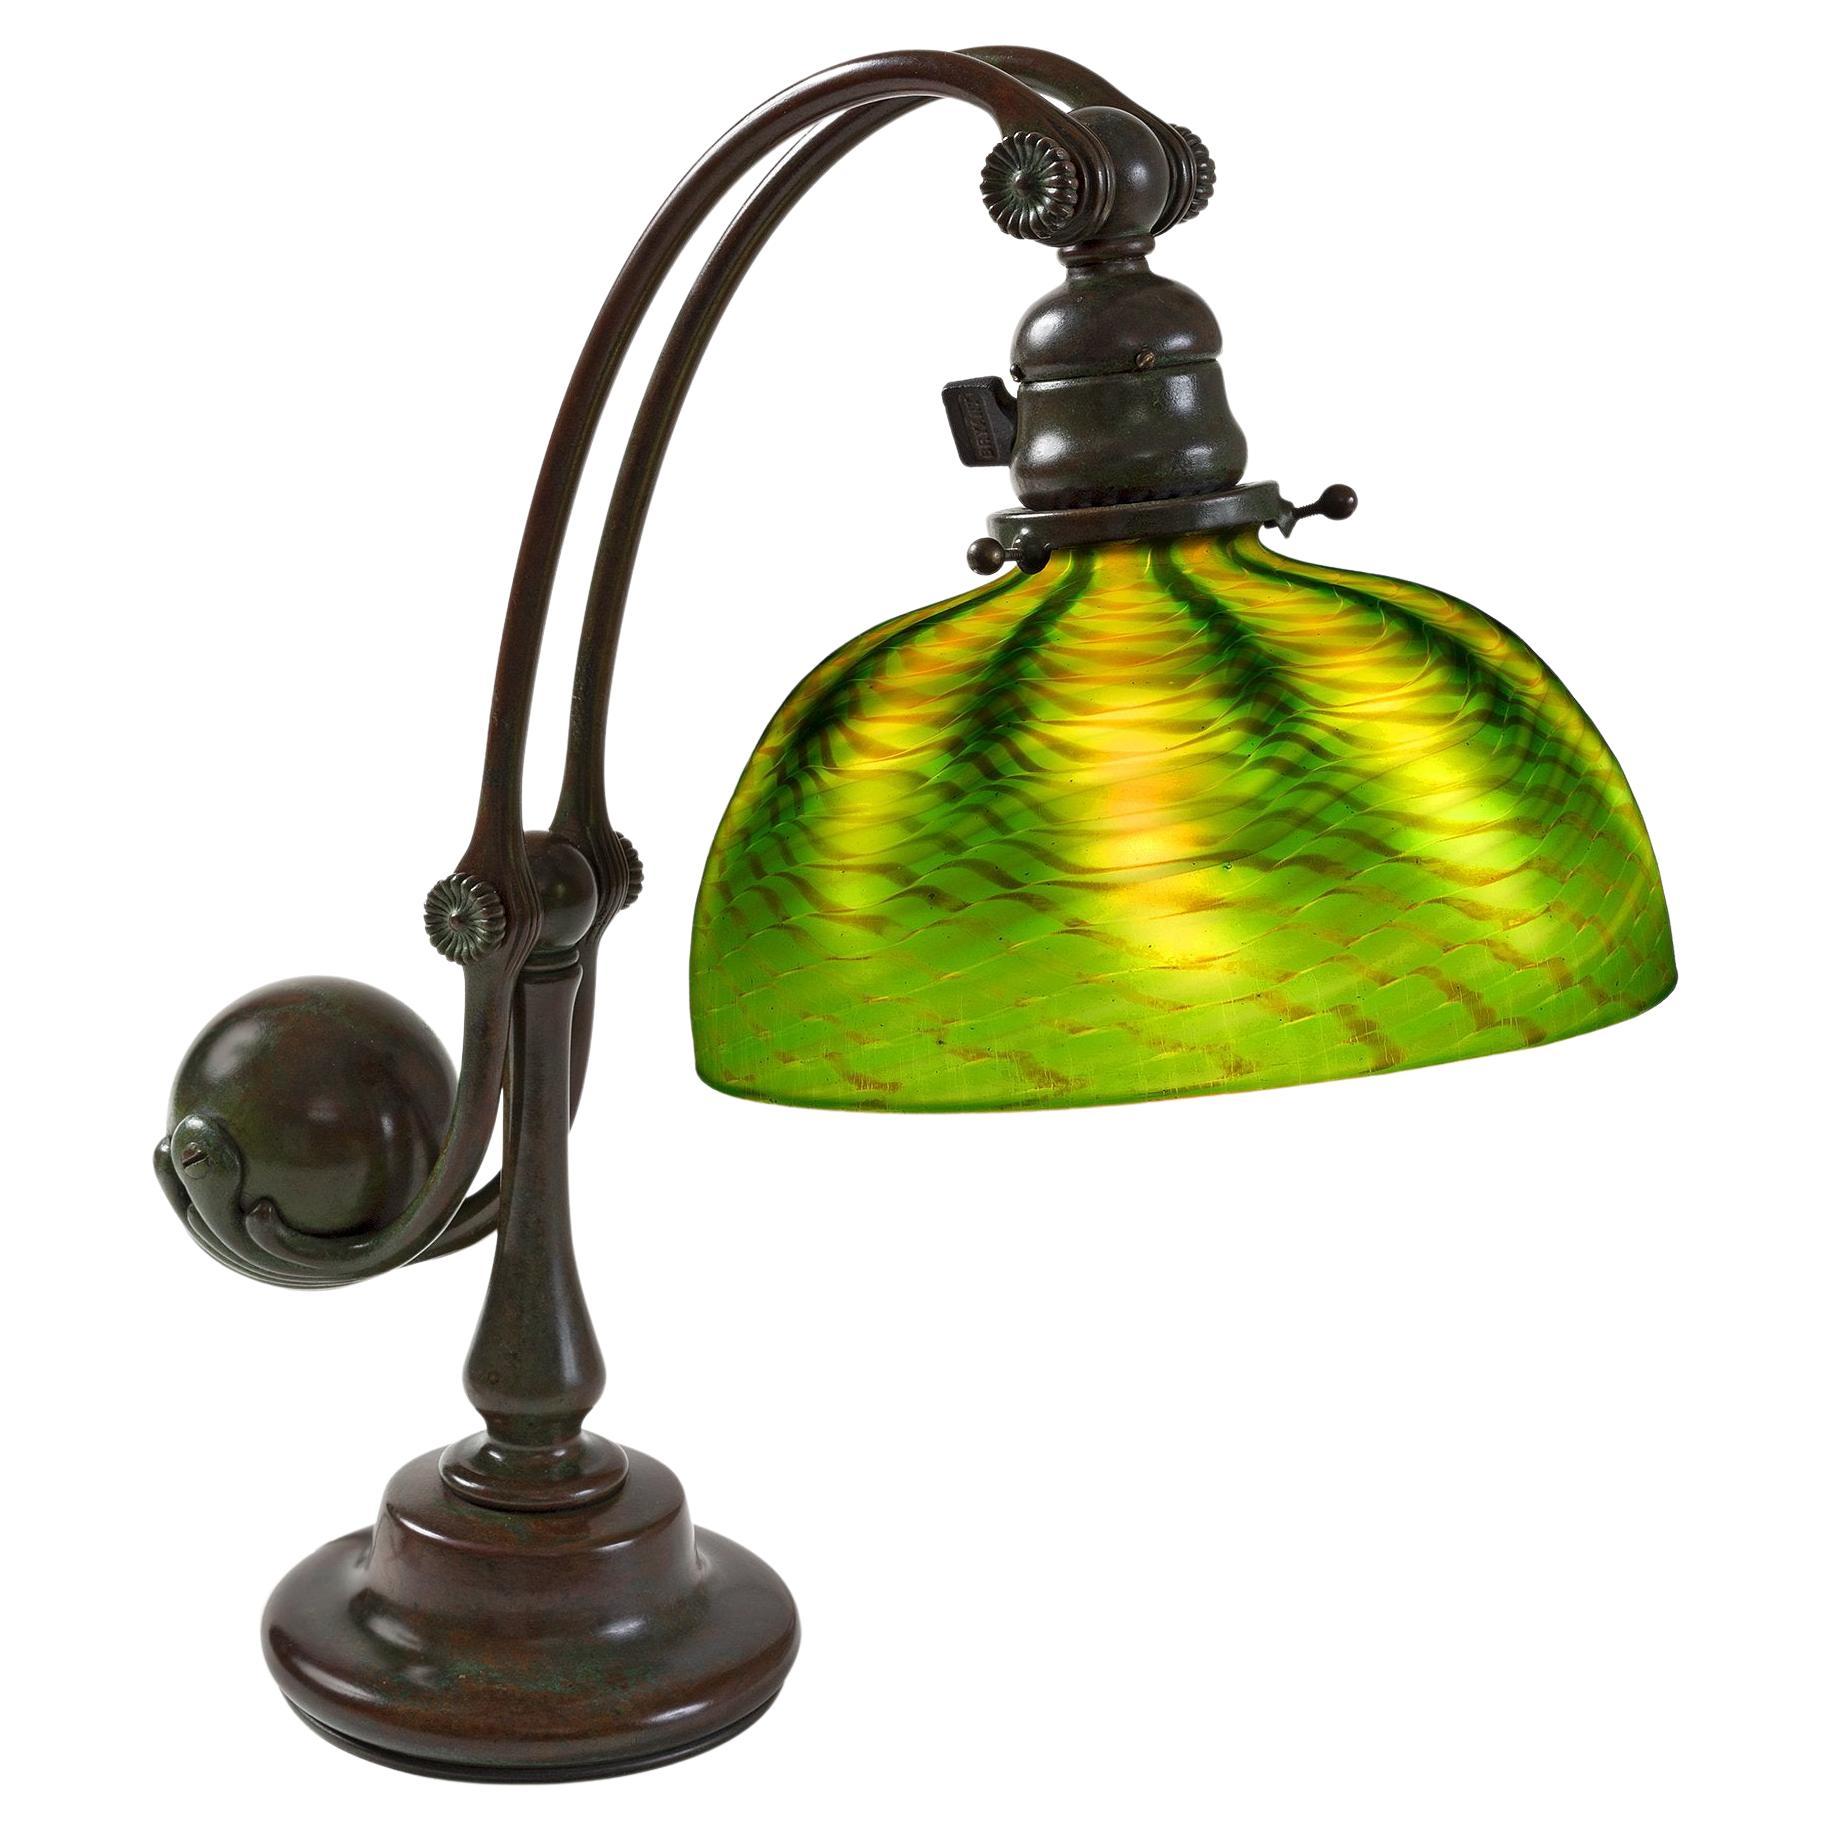 Tiffany Studios New York "Counter Balance" Damascene Lamp